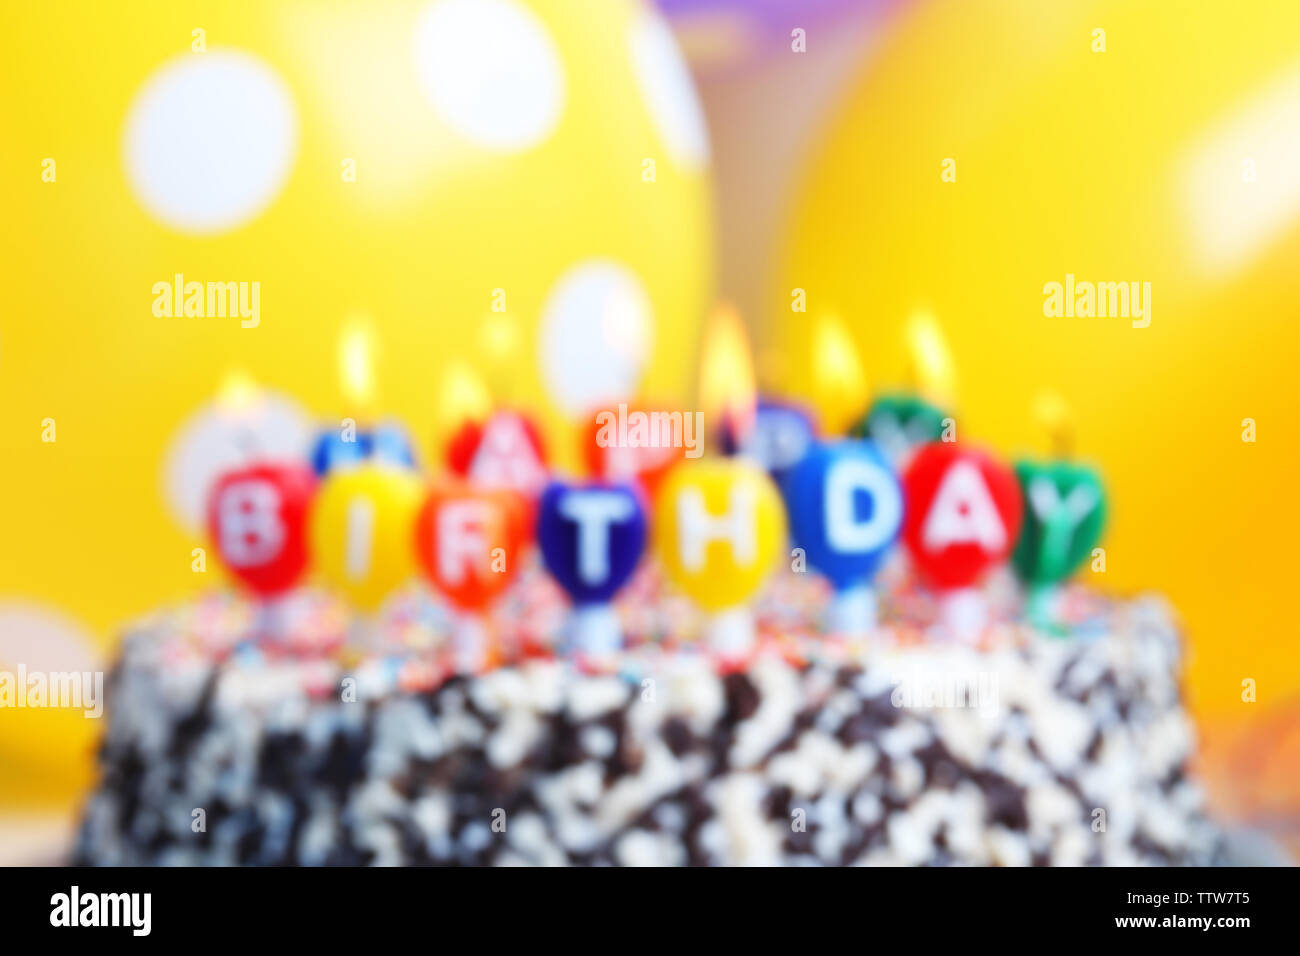 Blurred Birthday cake on balloons background Stock Photo - Alamy